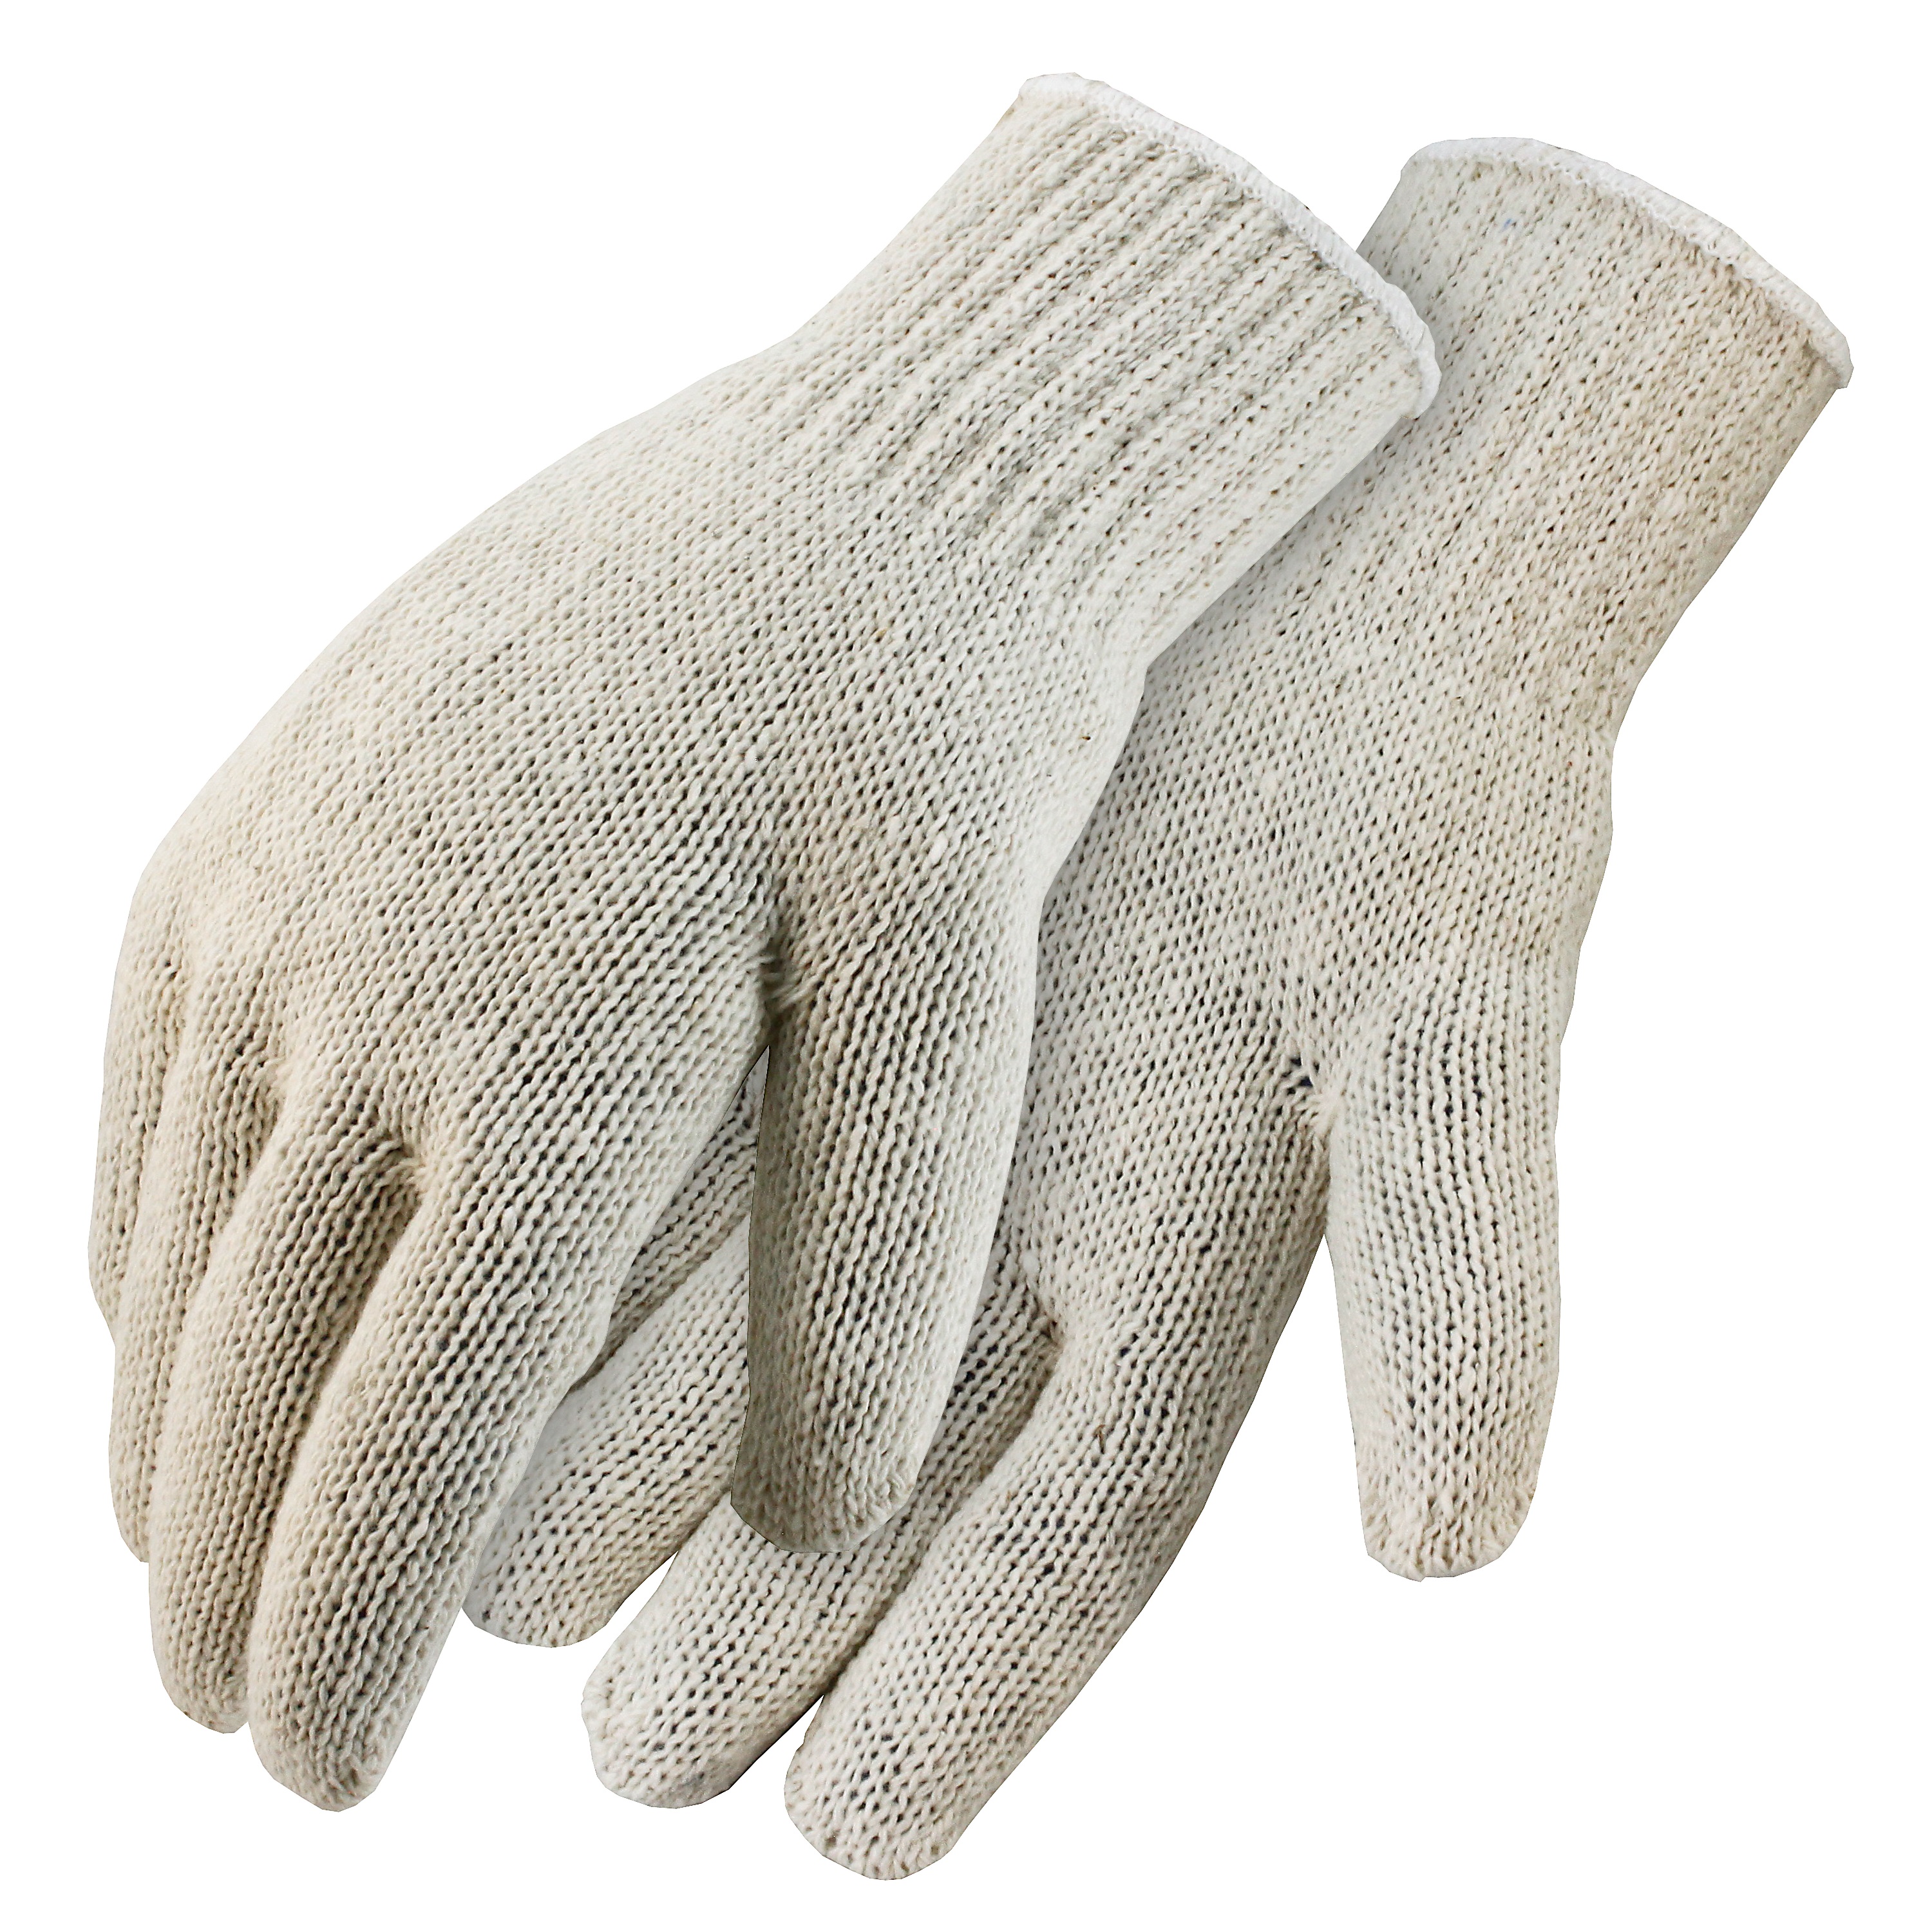 String Knit Gloves, Cotton Blend, XL